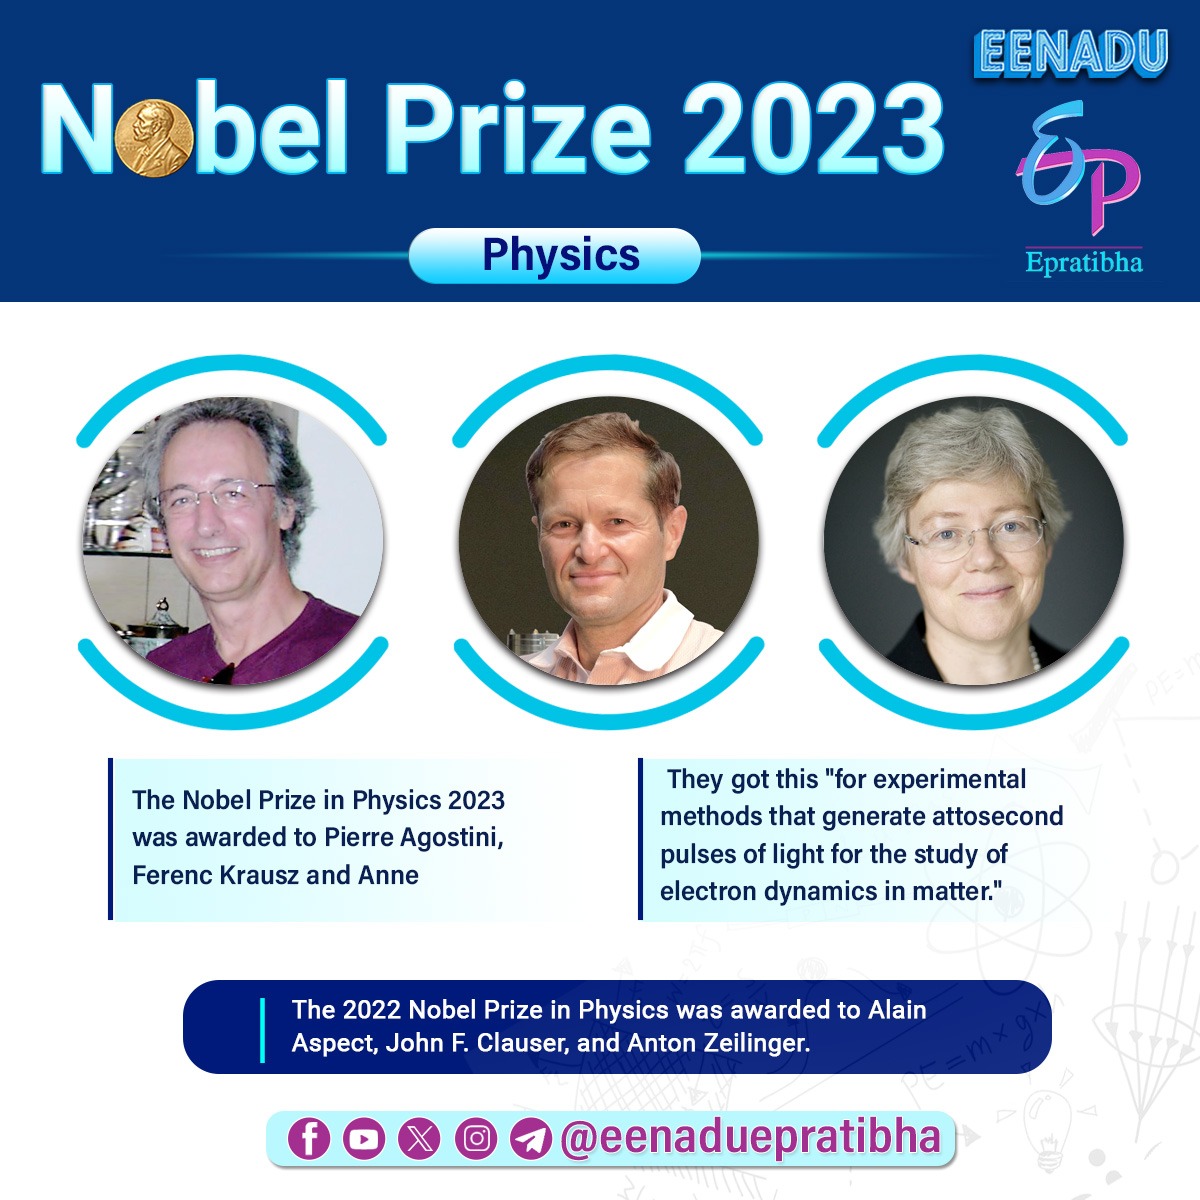 #Generalawareness #NobelPrize2023 #Physics #PierreAgostini #FerencKrausz #AnneLHuillier